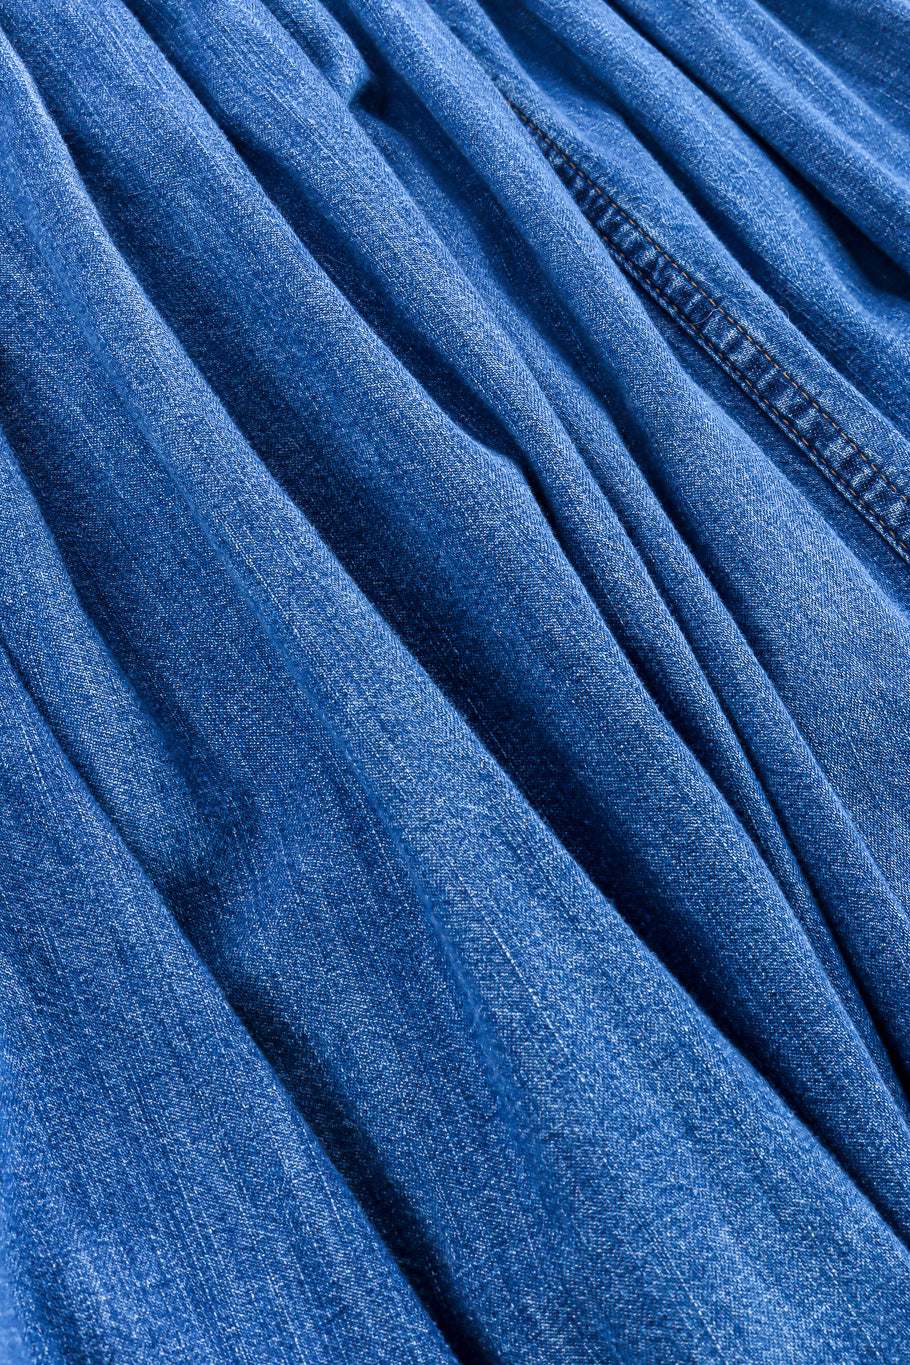 Prada denim peasant skirt fabric details @recessla